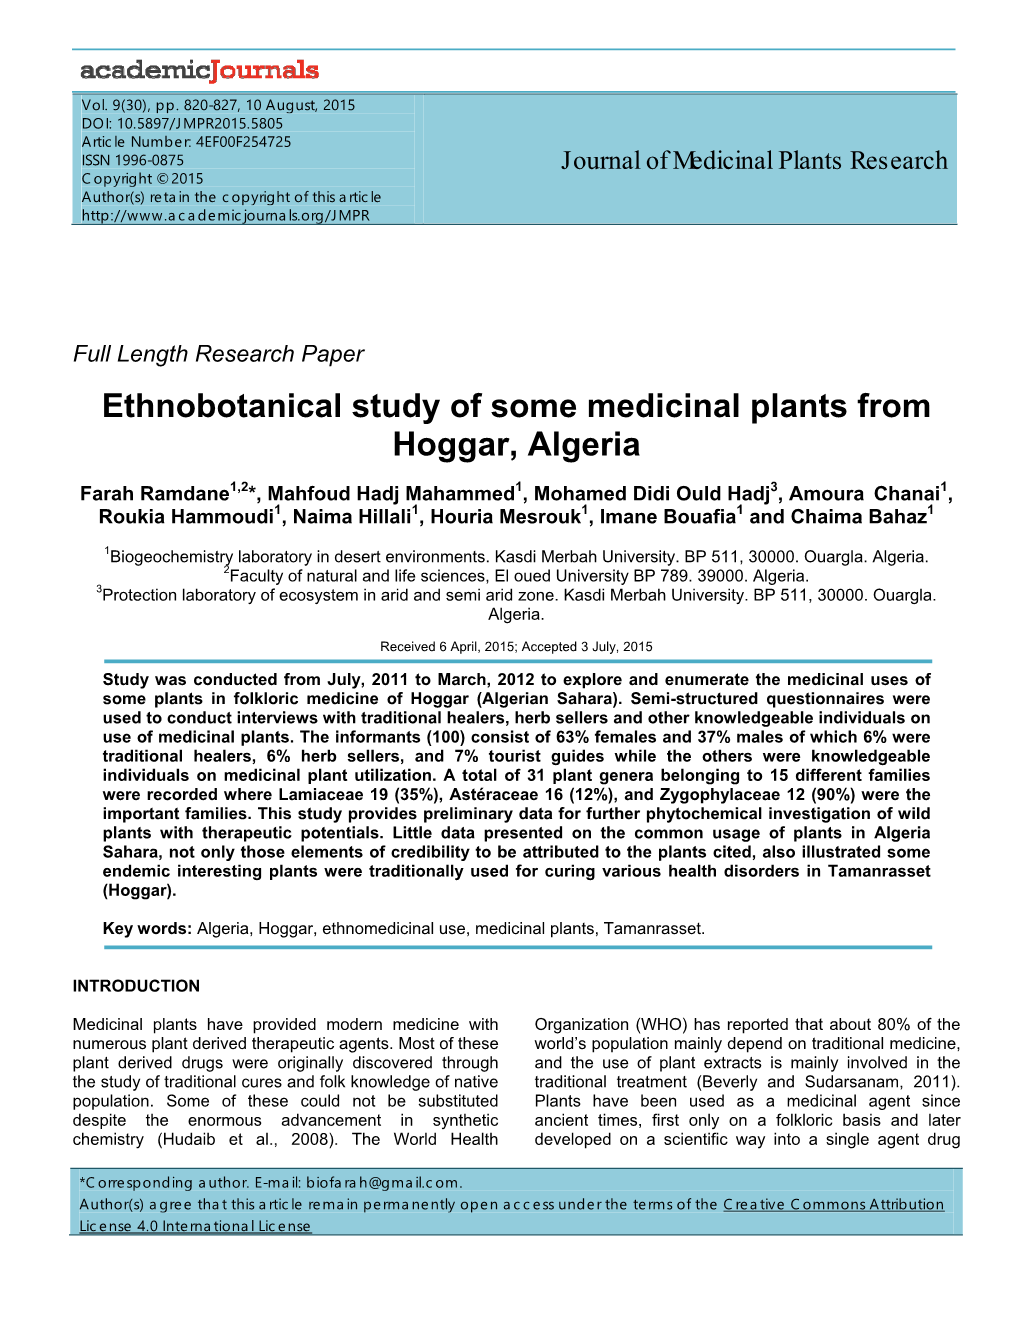 Ethnobotanical Study of Some Medicinal Plants from Hoggar, Algeria